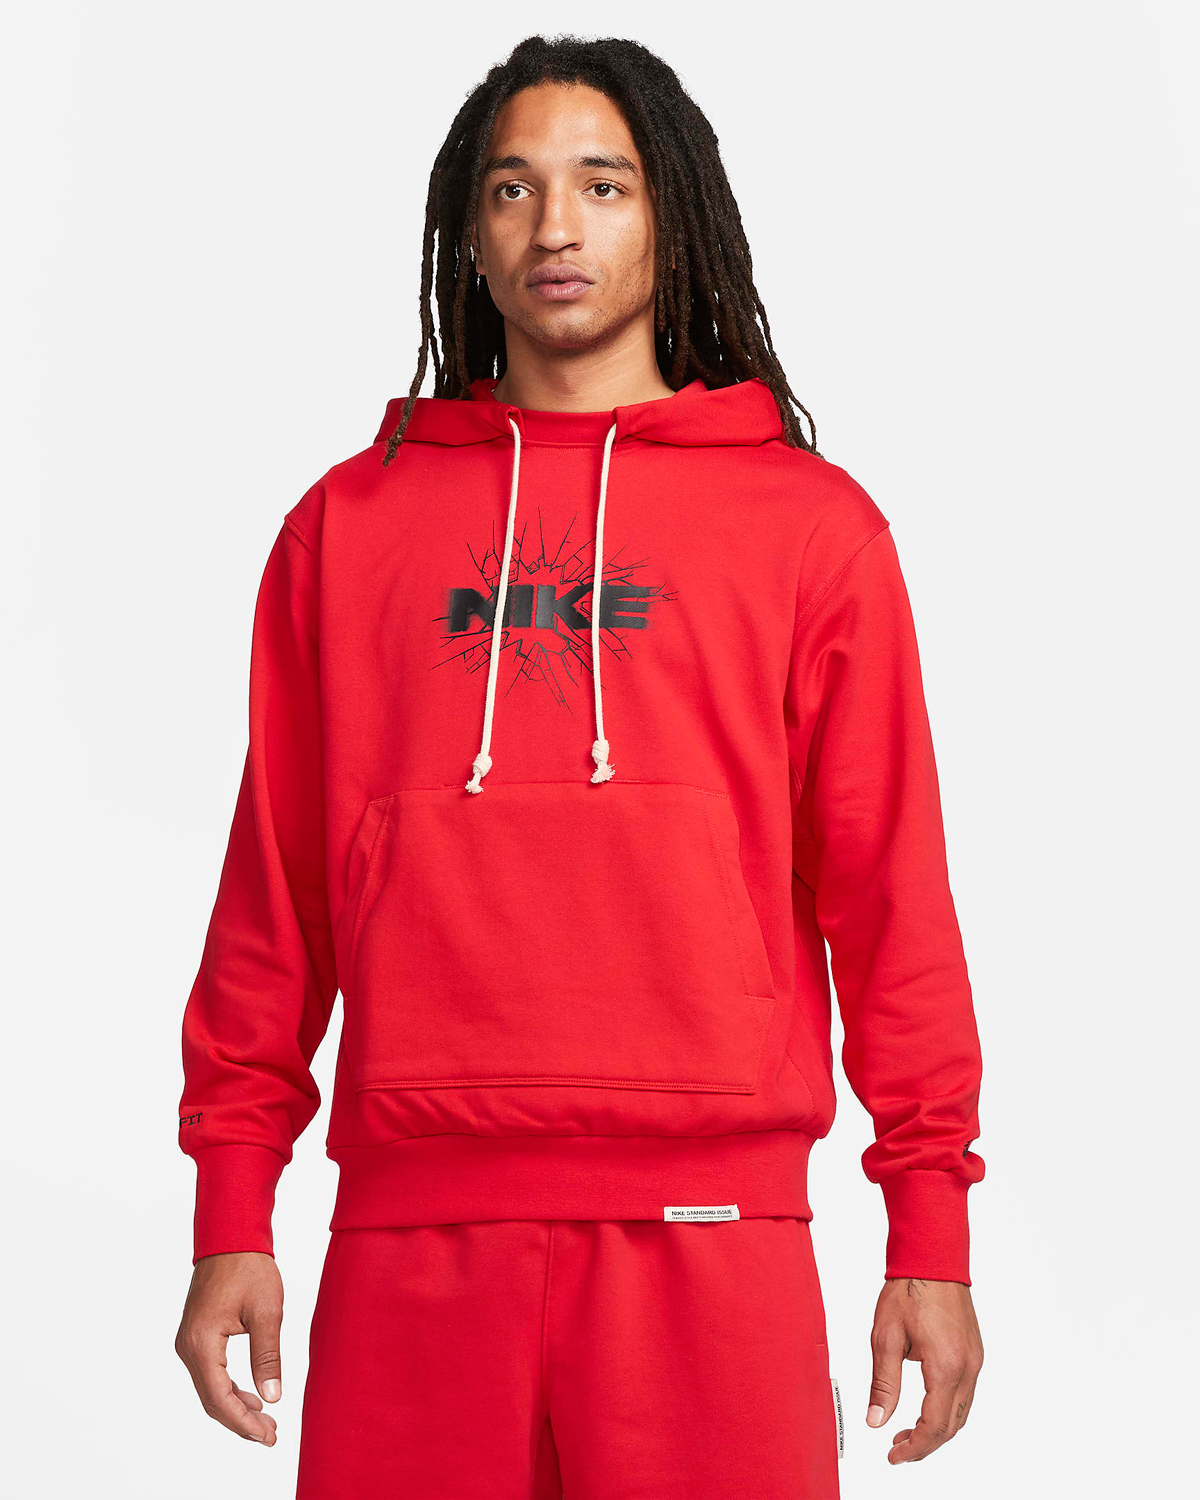 Nike-Standard-Issue-Basketball-Hoodie-University-Red